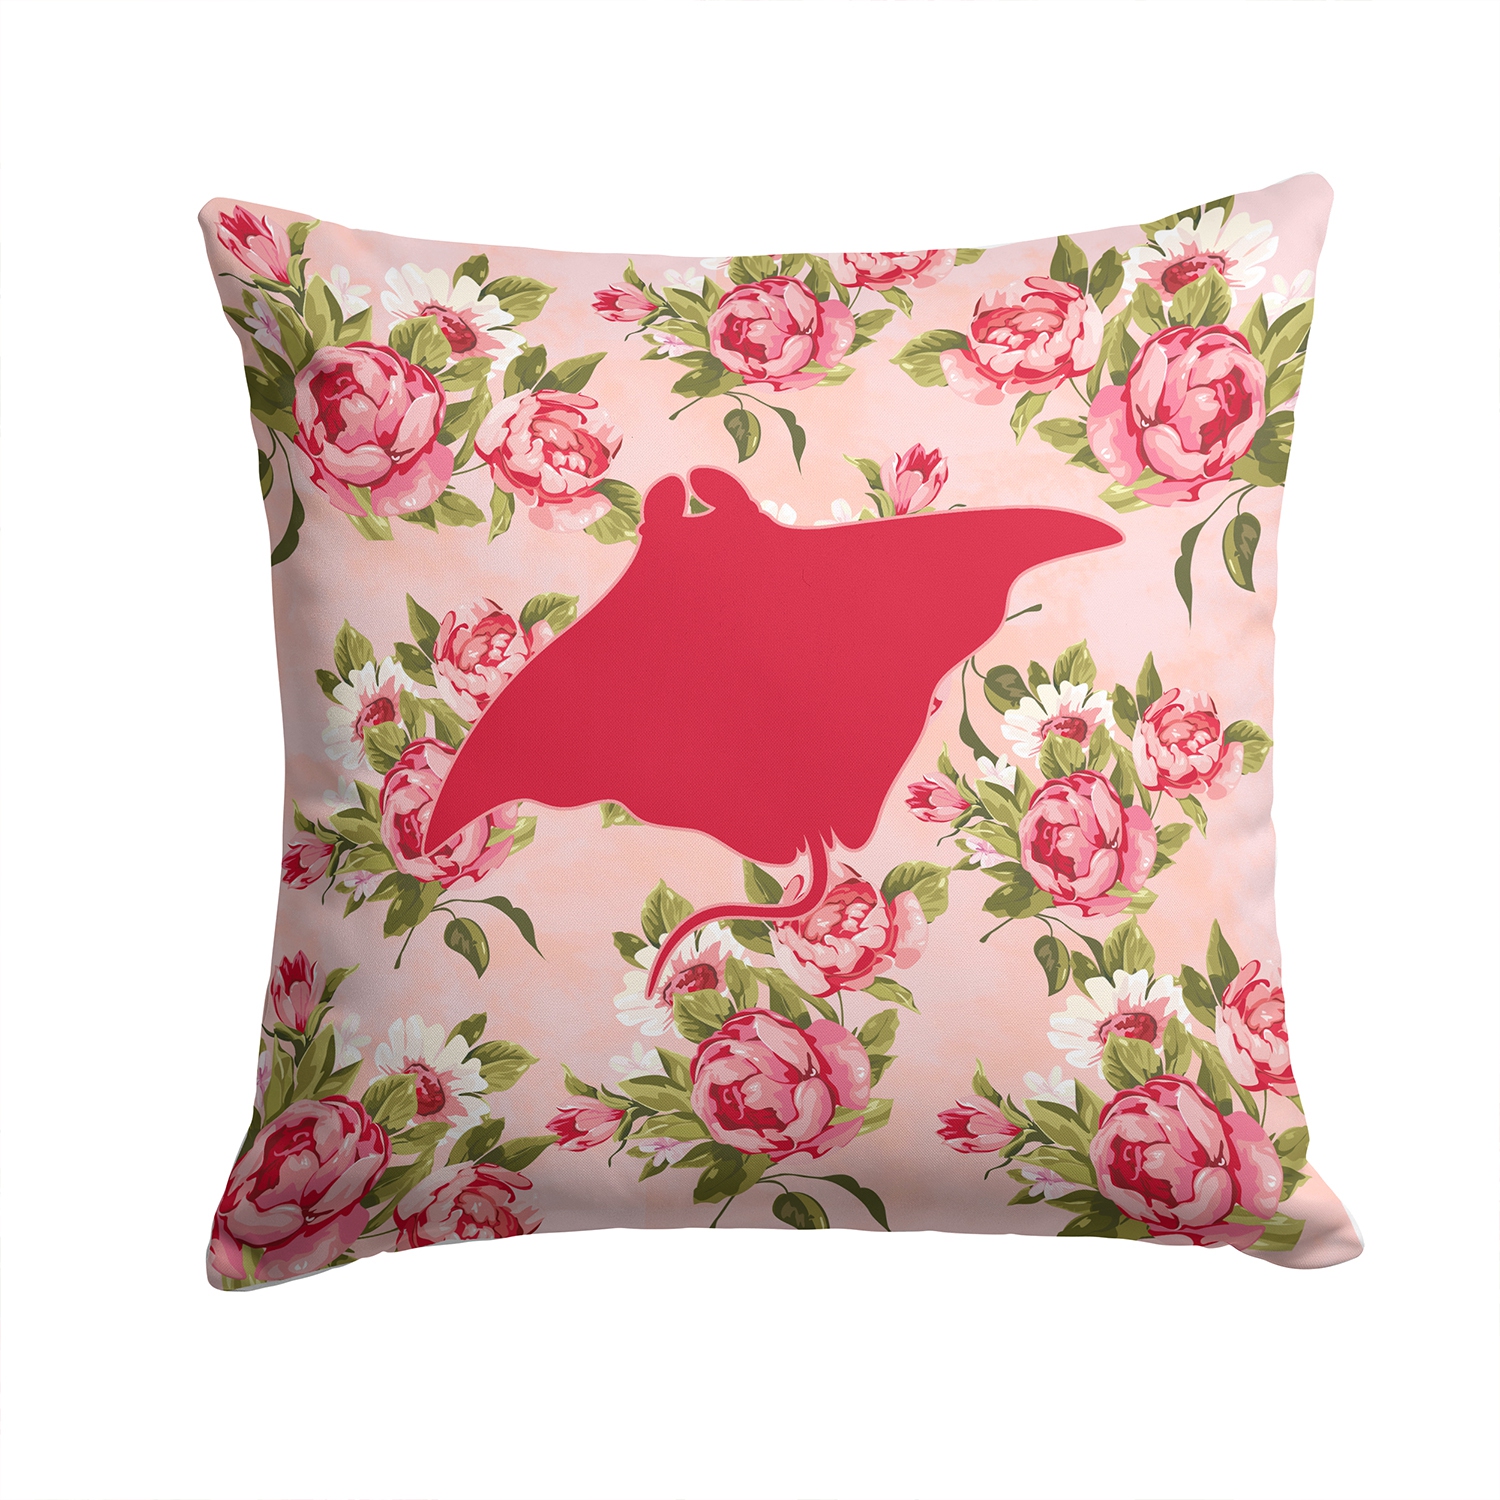 Caroline's Treasures BB1014-RS-PK-PW1414 Manta ray Shabby Chic Pink Roses Fabric Decorative Pillow, 14Hx14W, multicolor